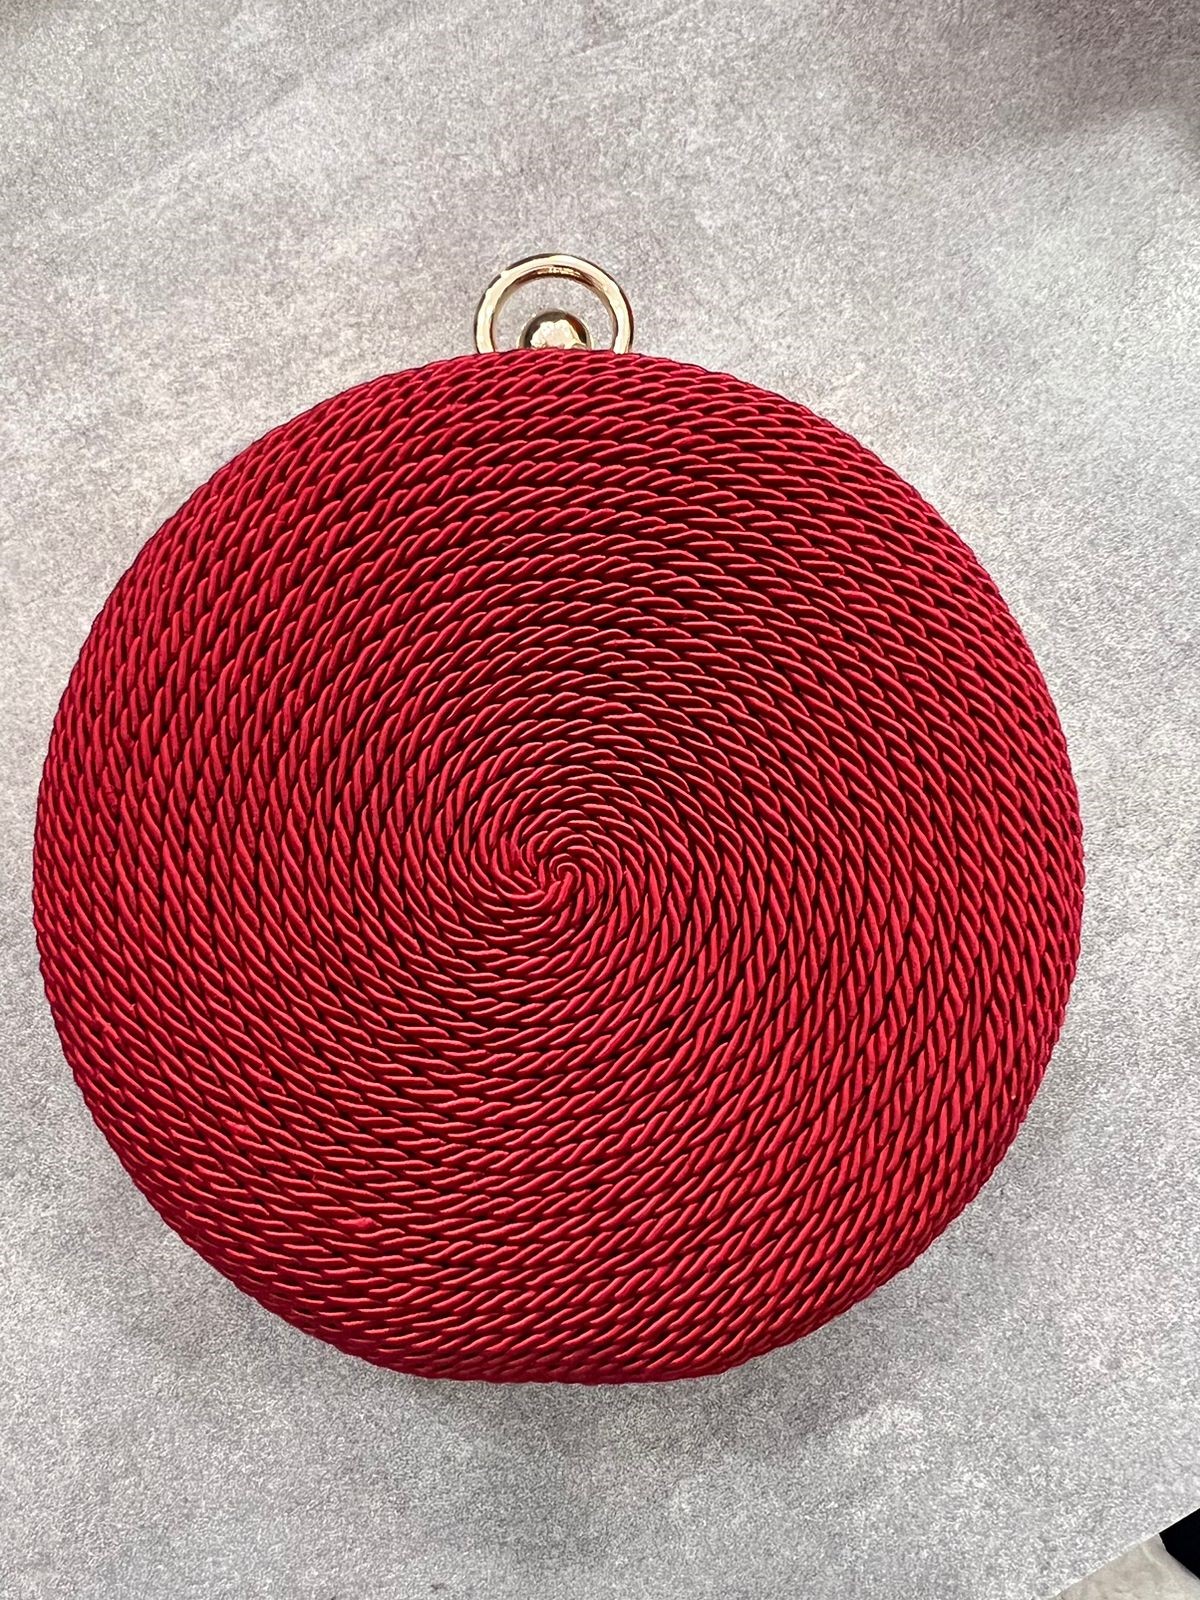 Clutch de corda vermelha redonda